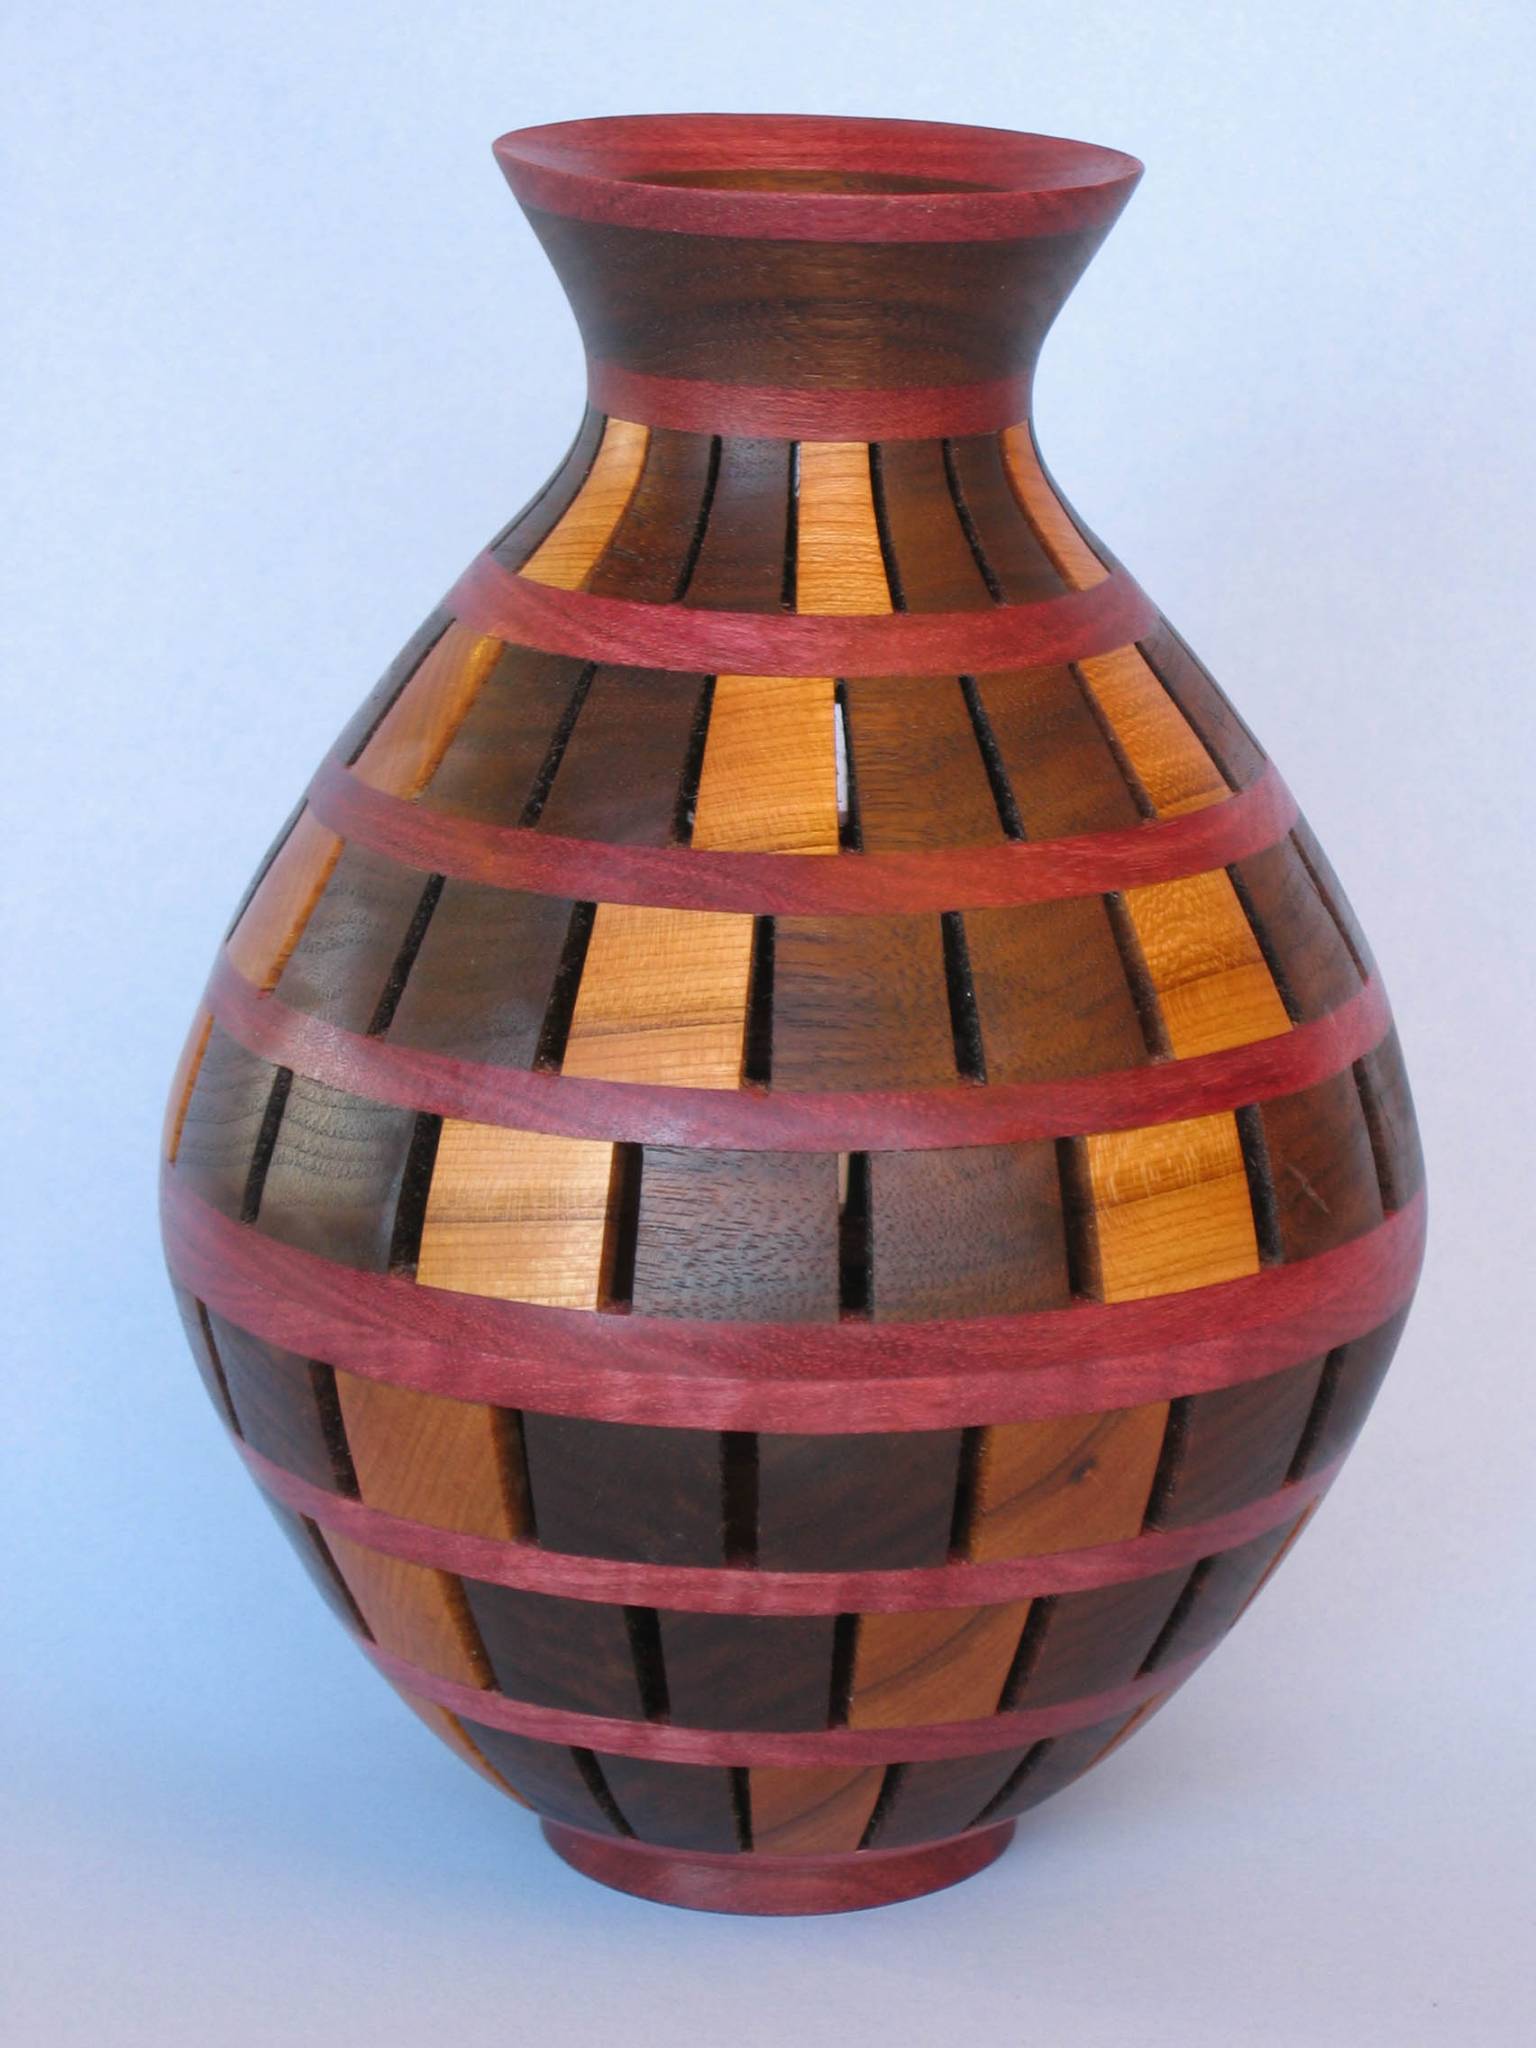 scrolled open segmented vase